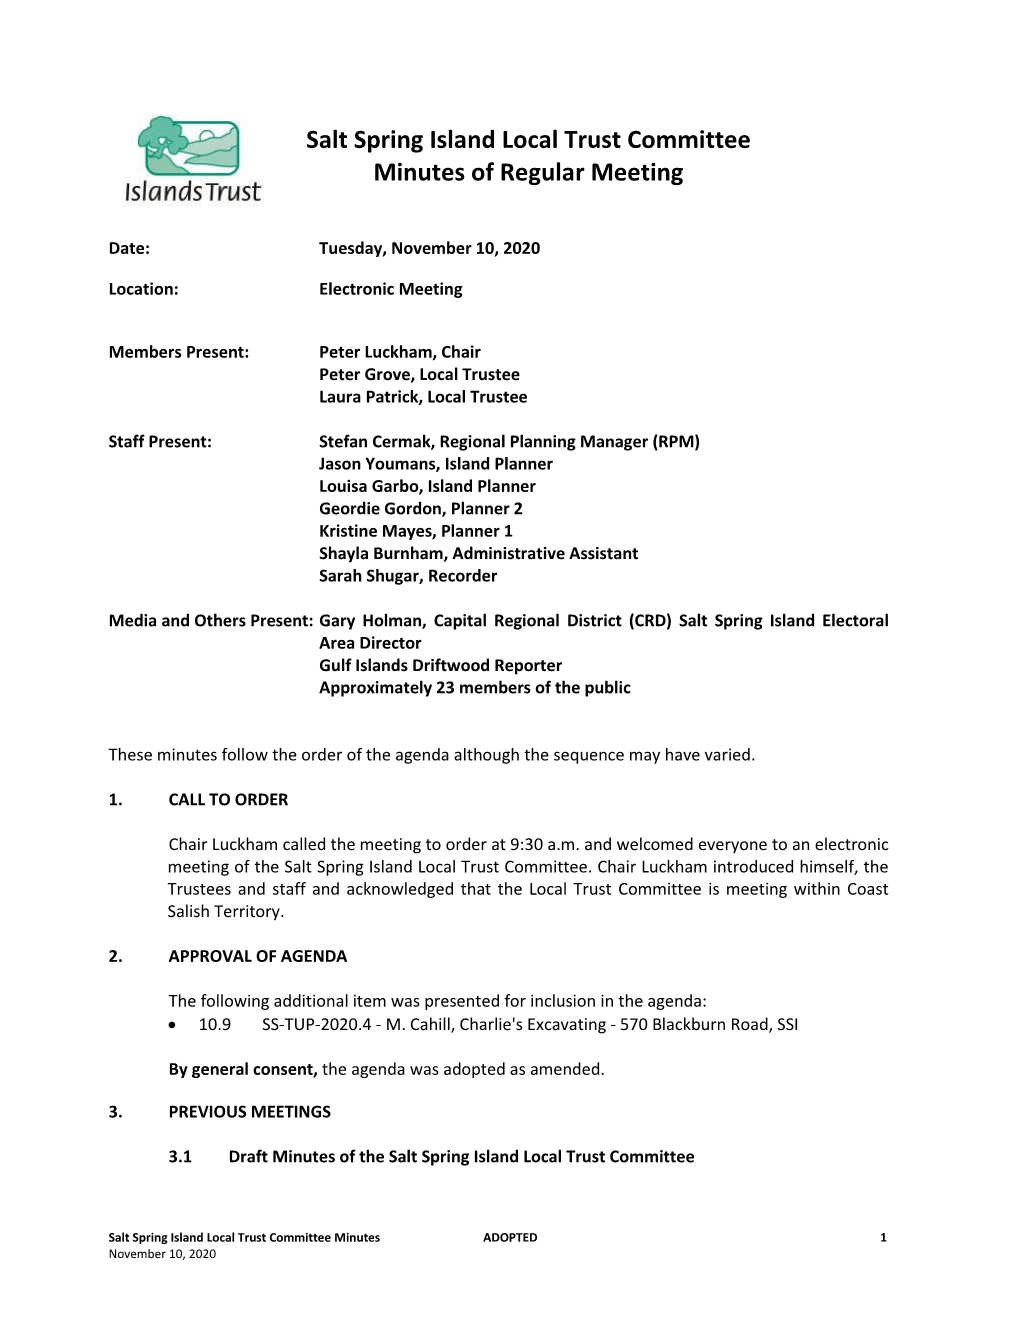 Salt Spring Island Local Trust Committee Minutes of Regular Meeting